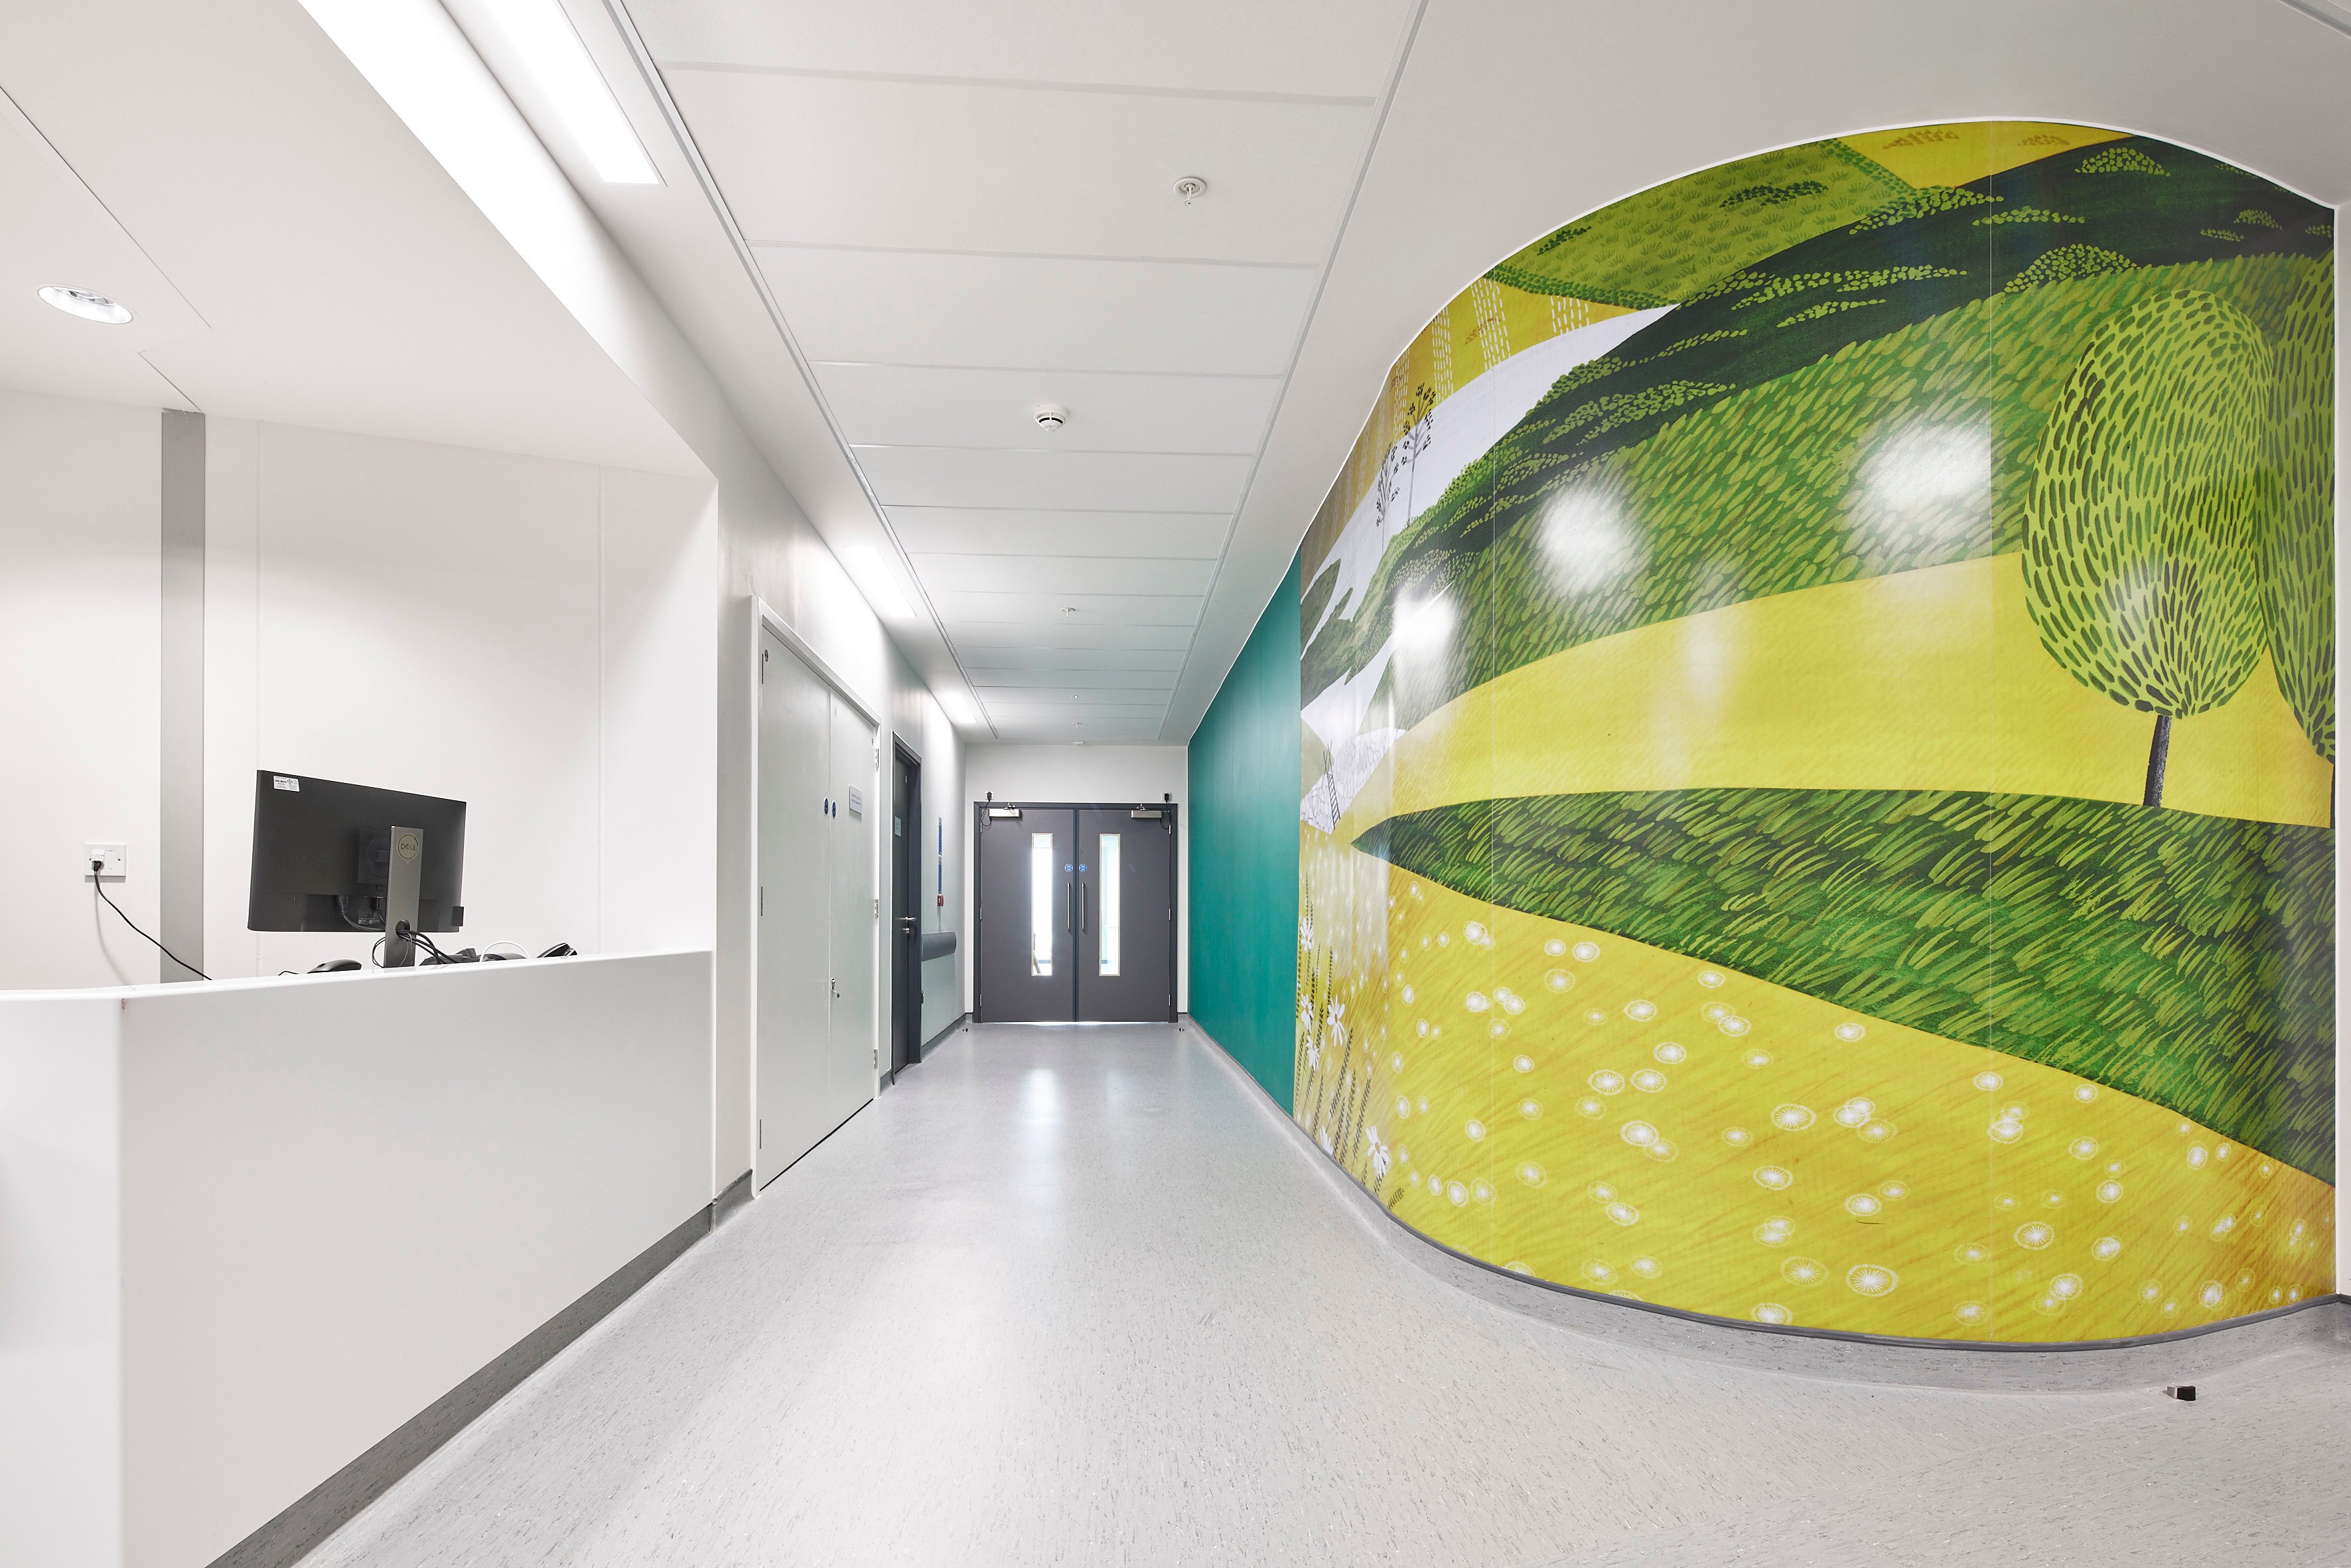 Corridor at Grange University Hospital with beautiful wall protection